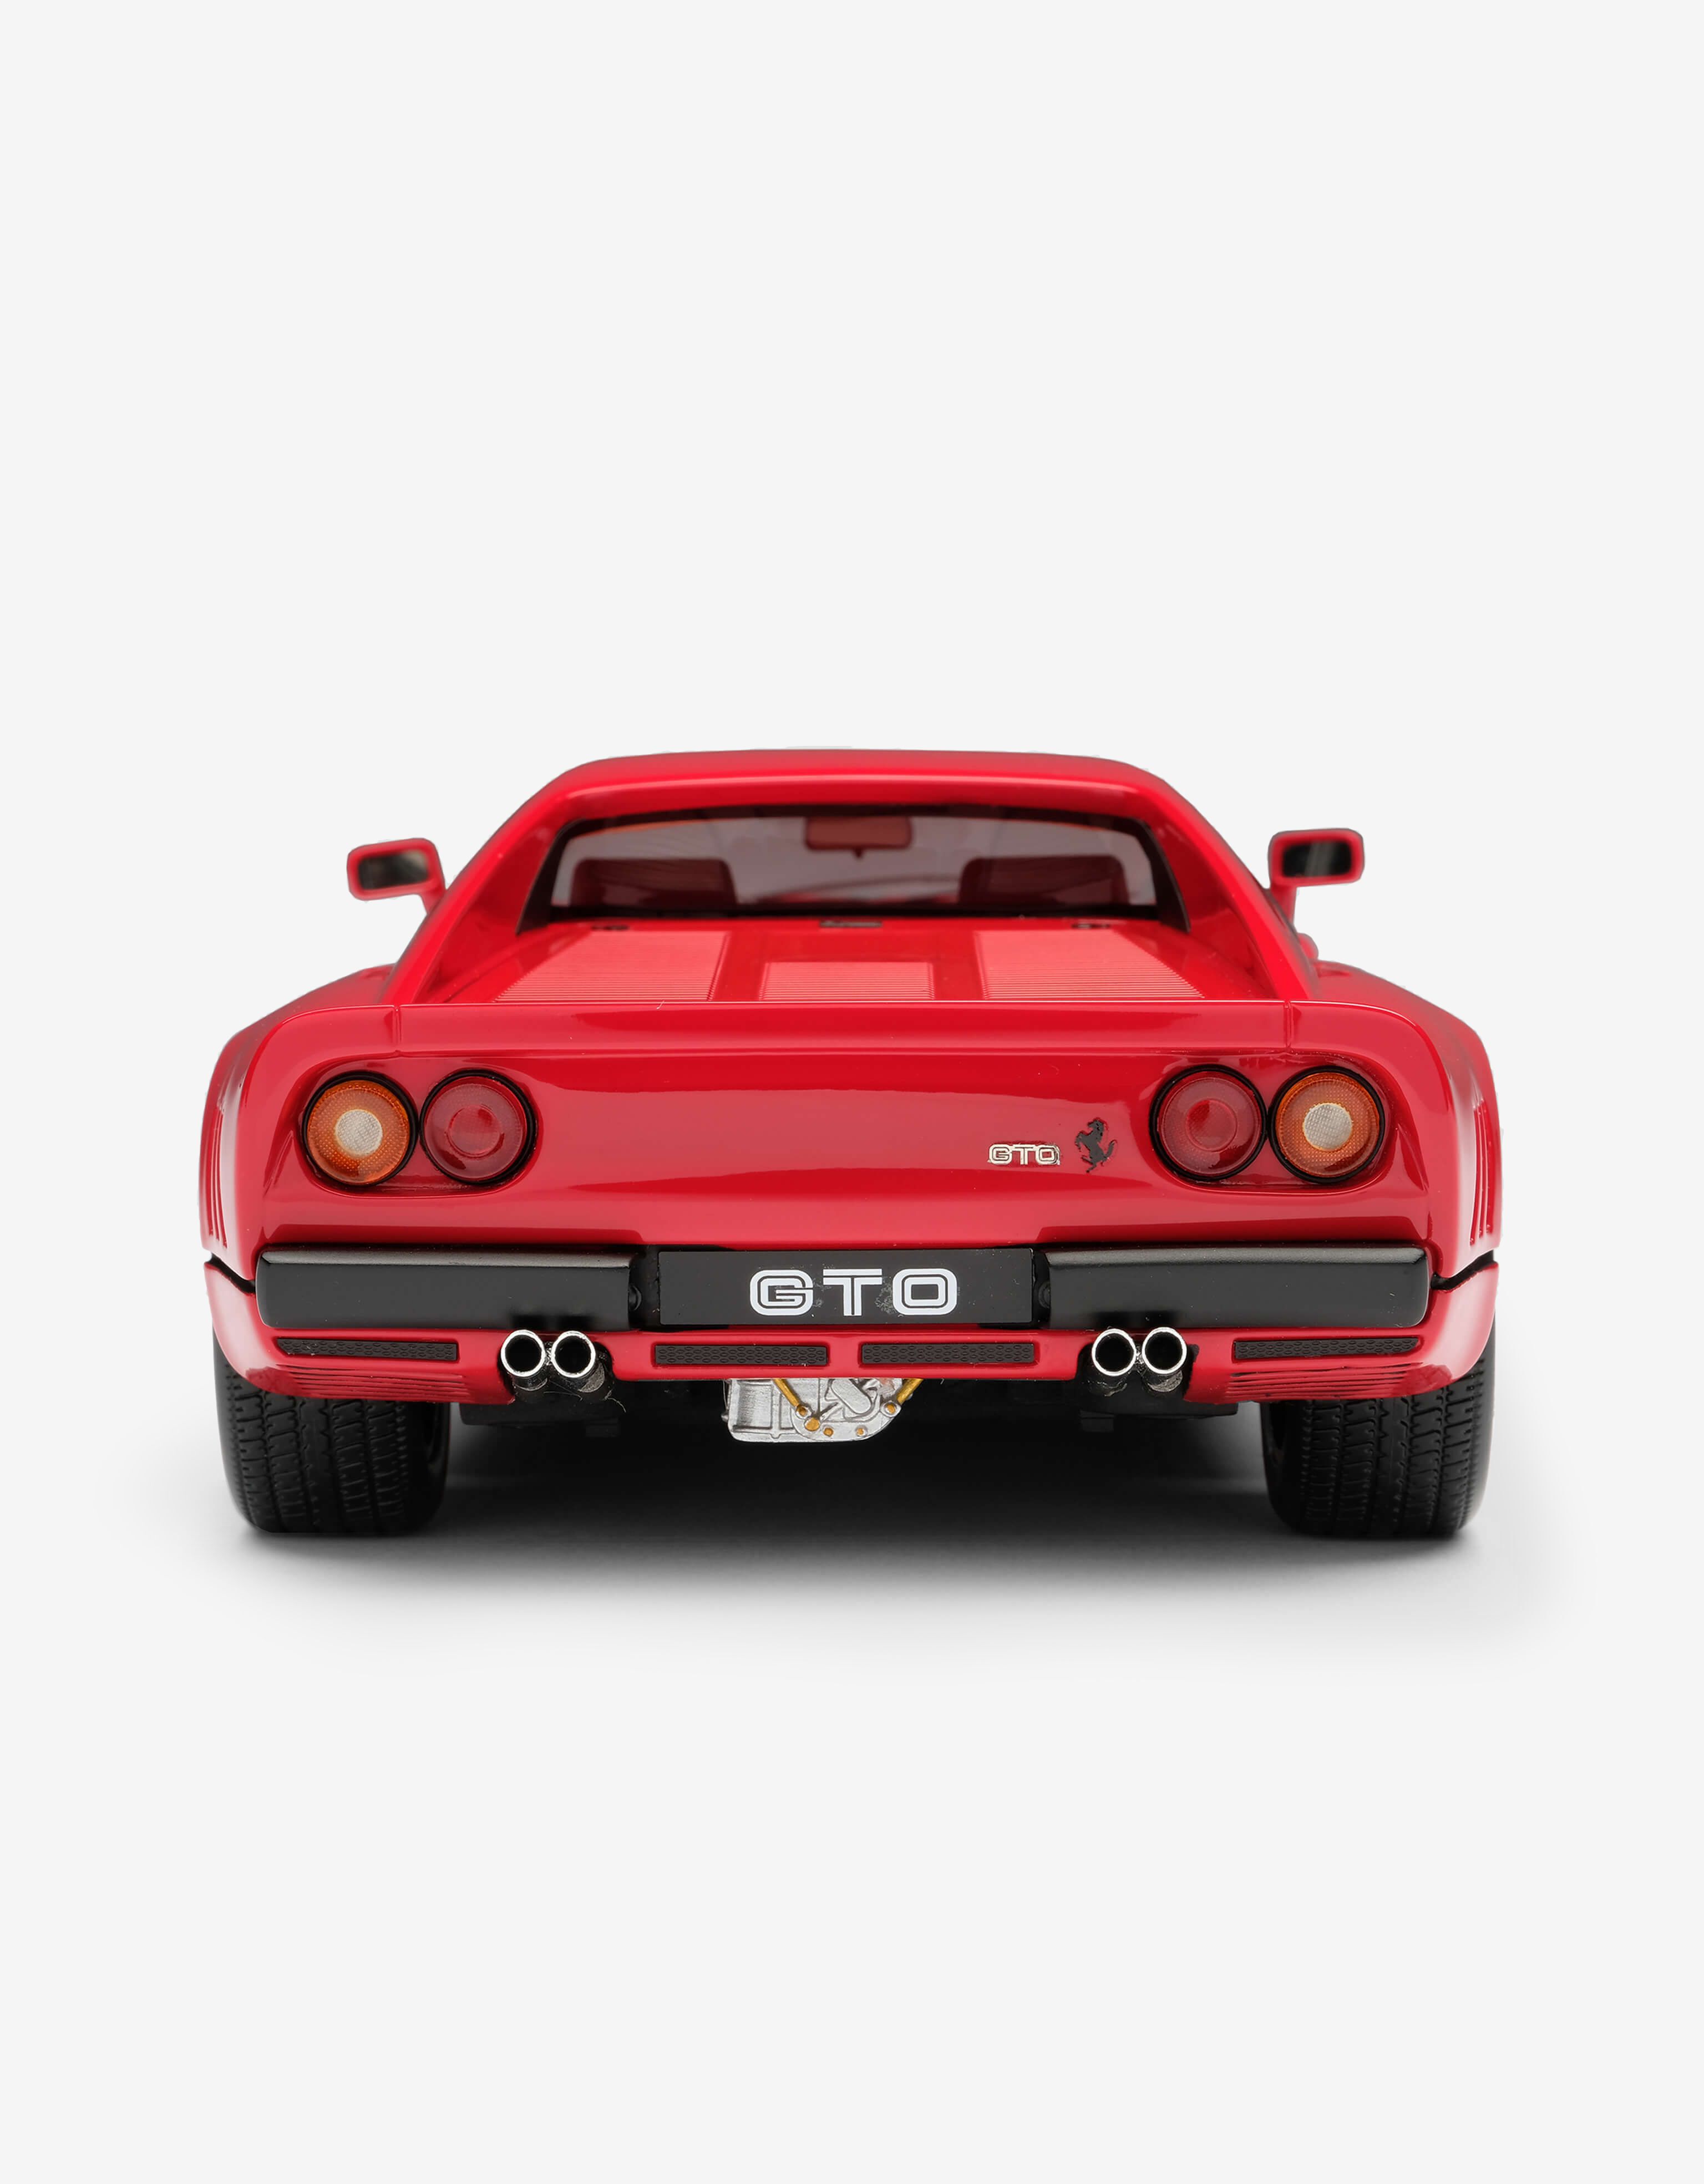 Ferrari Ferrari 288 GTO Le Mans model in 1:18 scale Red L7812f